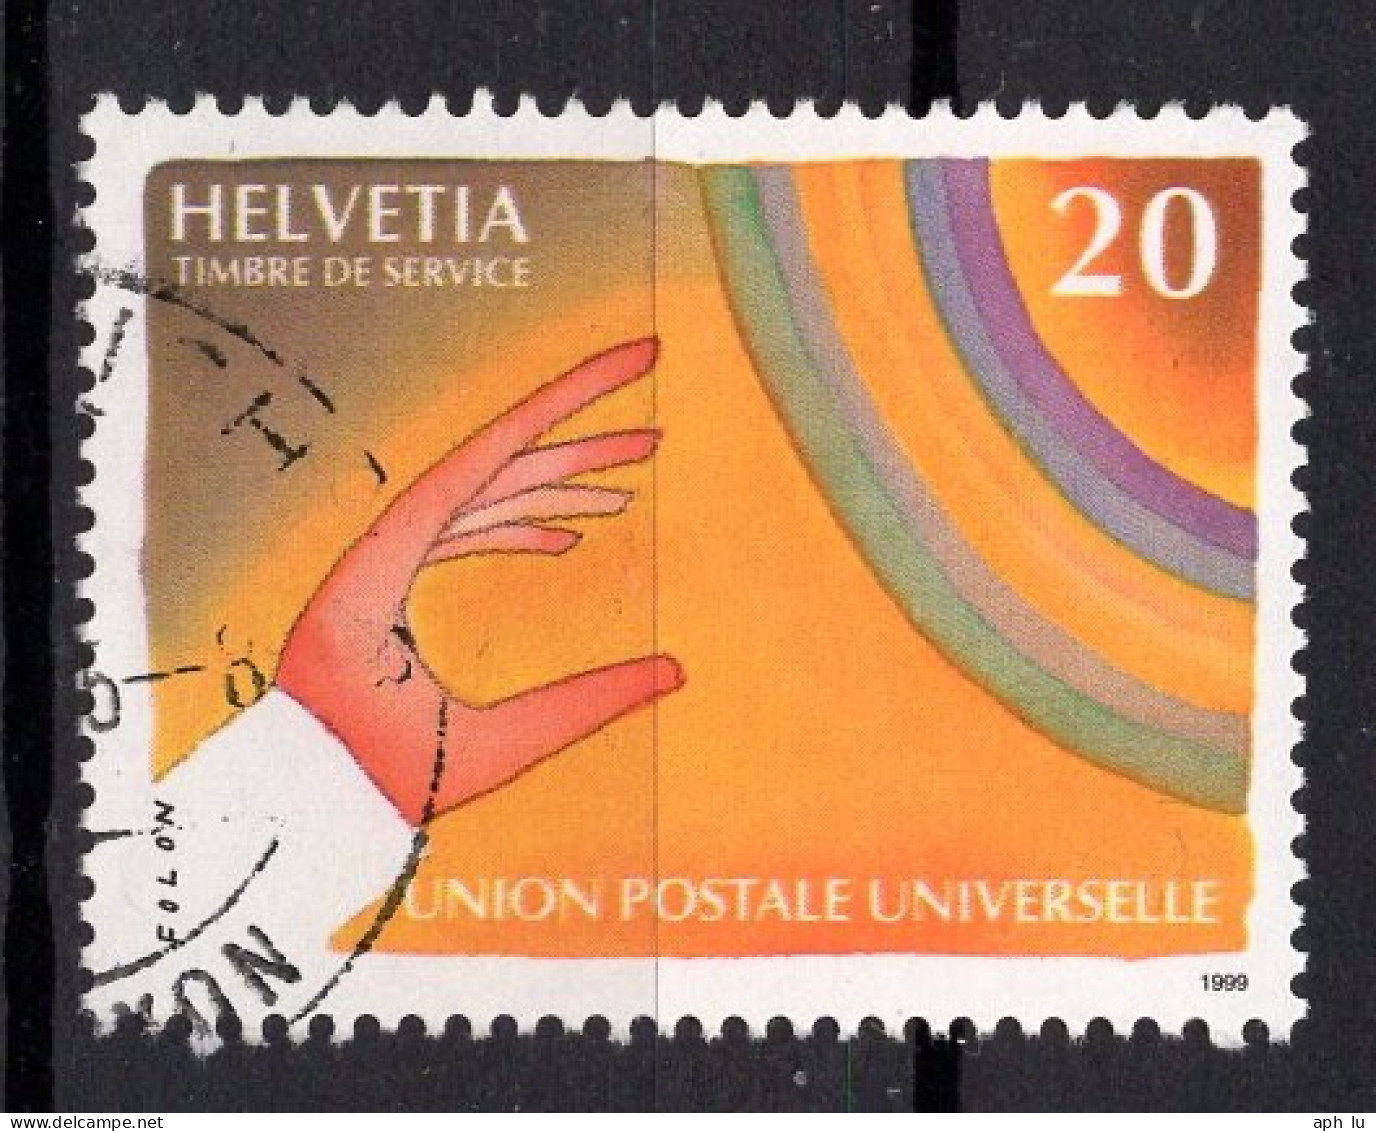 Union Postale Universelle (UPU) (h600903) - Dienstzegels